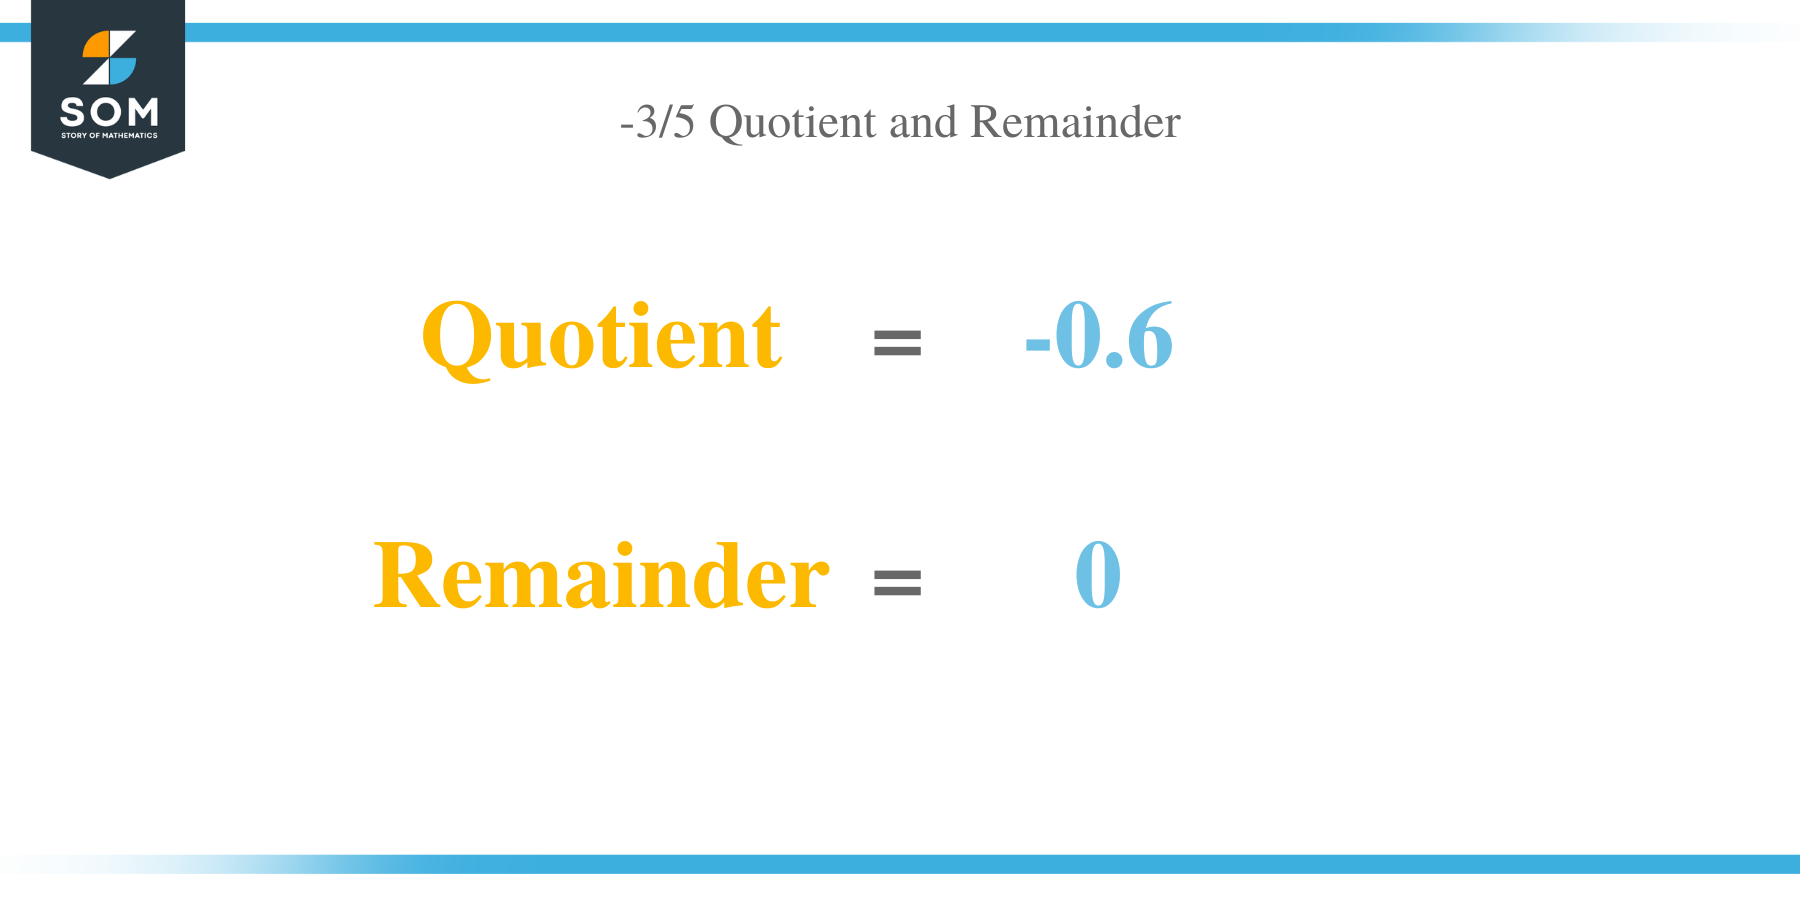 Quotient and remainder of 3 per 5